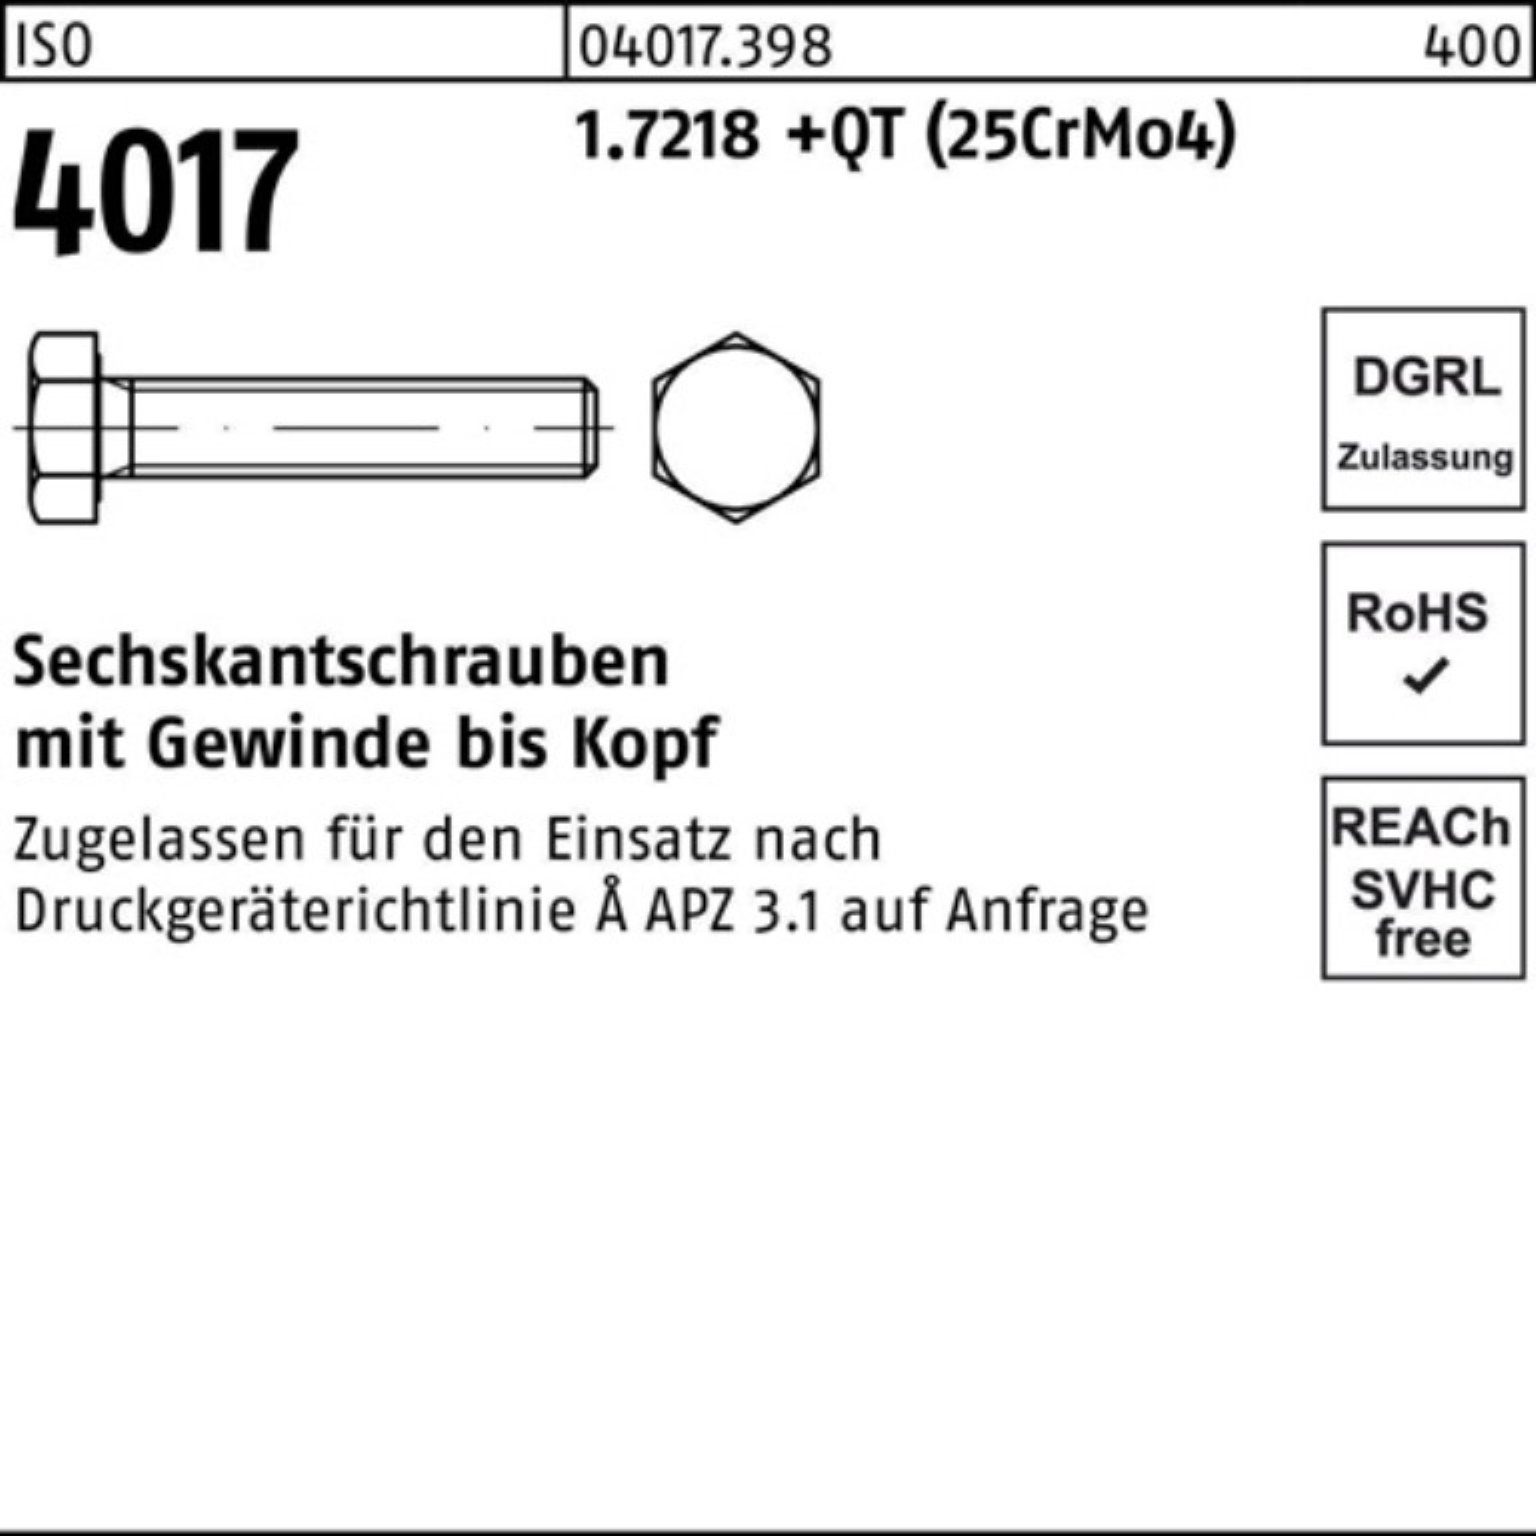 Bufab Sechskantschraube 100er Pack ISO VG 65 M27x Sechskantschraube 1.7218 (25CrMo4) +QT 4017